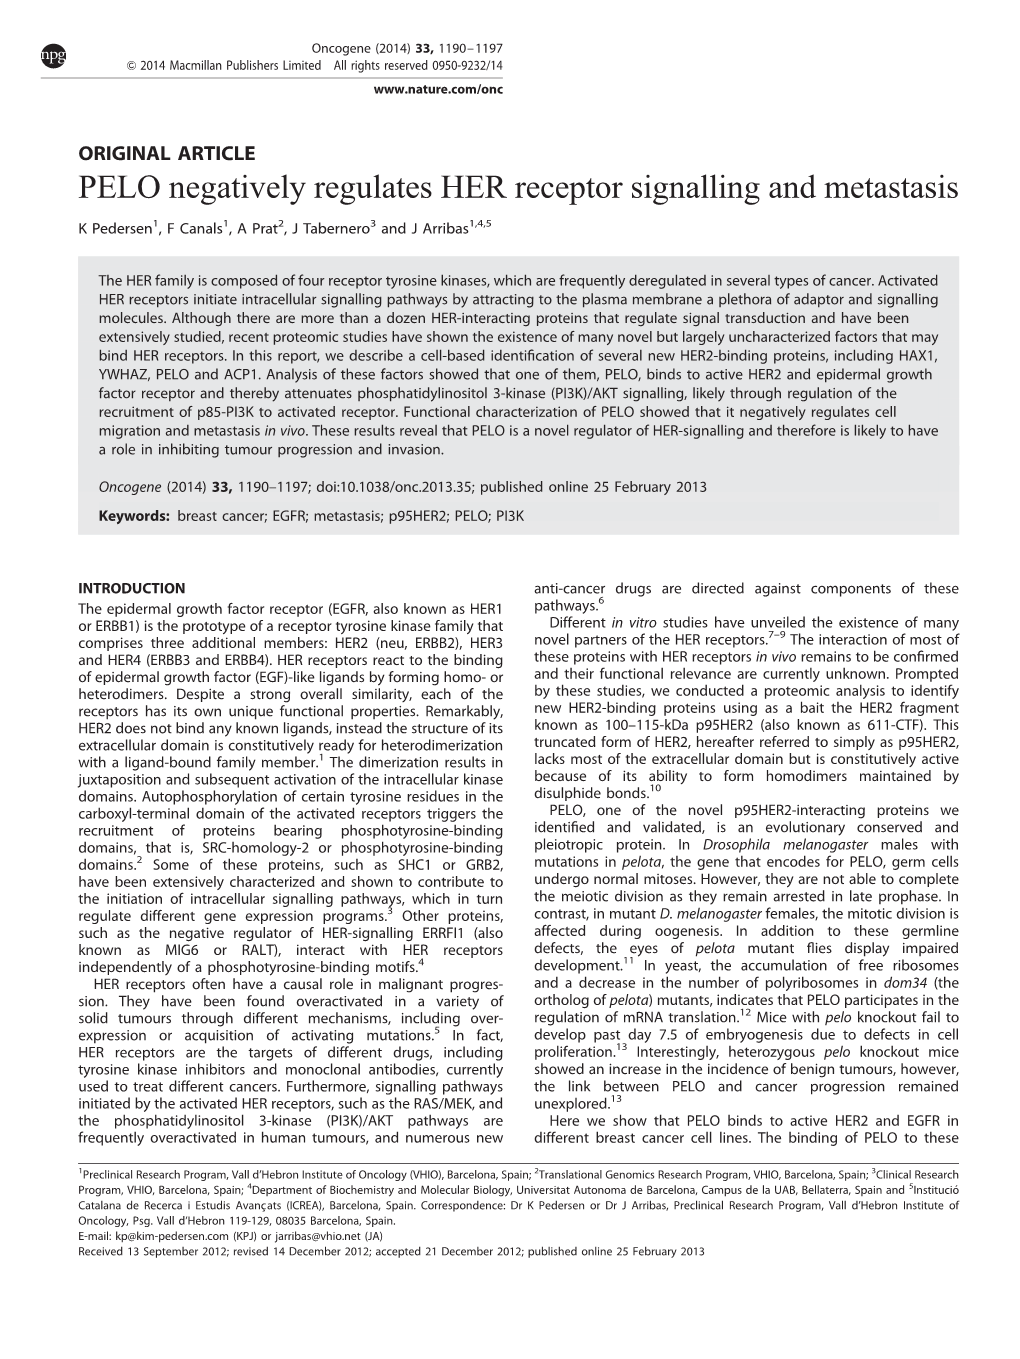 PELO Negatively Regulates HER Receptor Signalling and Metastasis